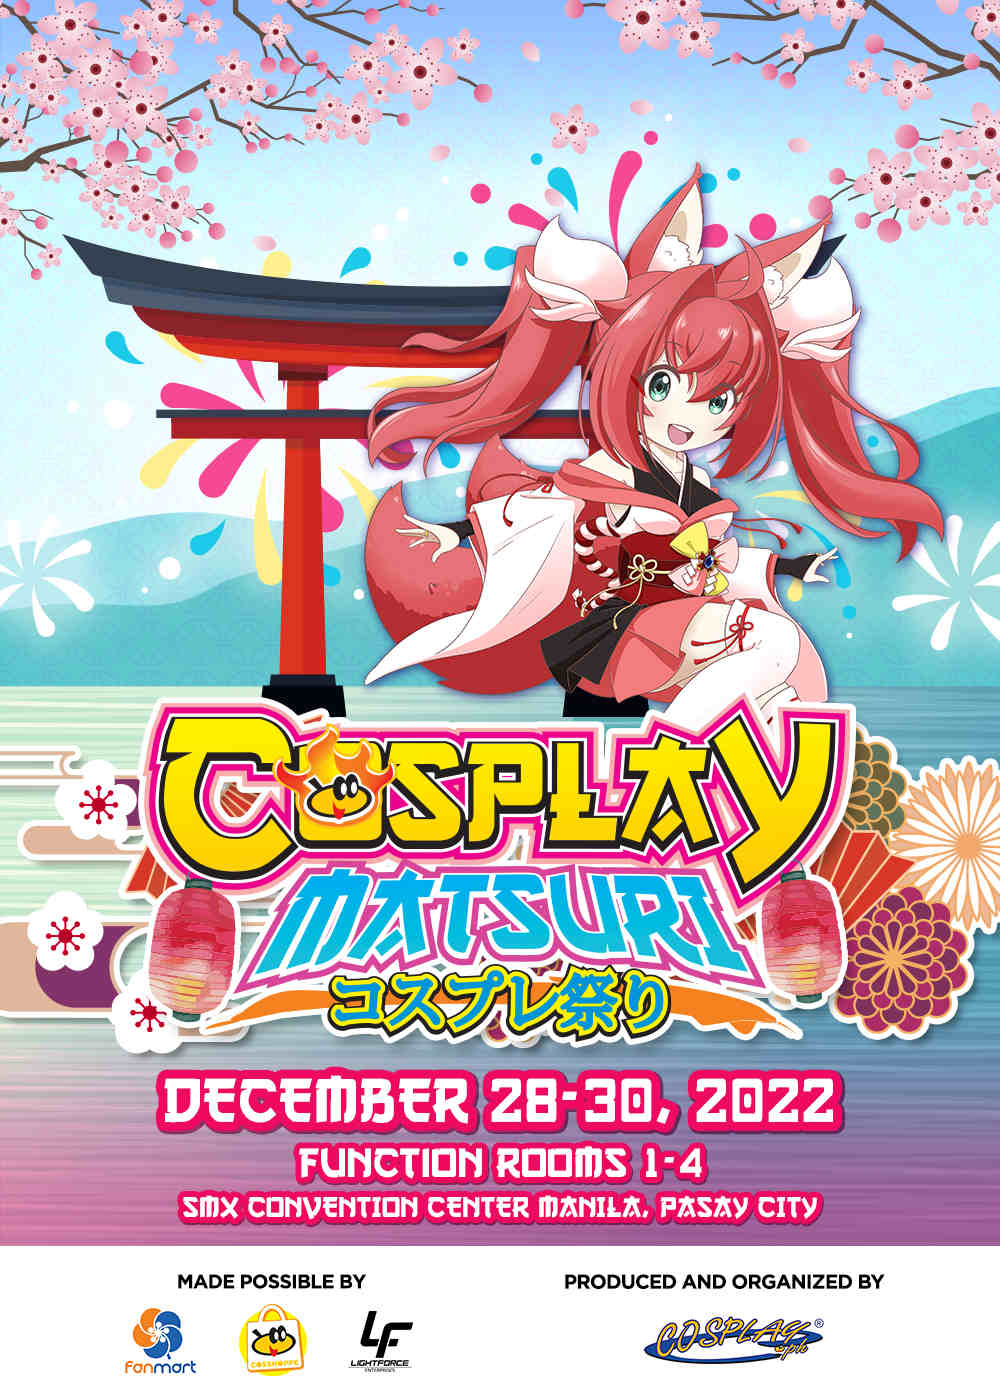 cosplay matsuri 2022 poster